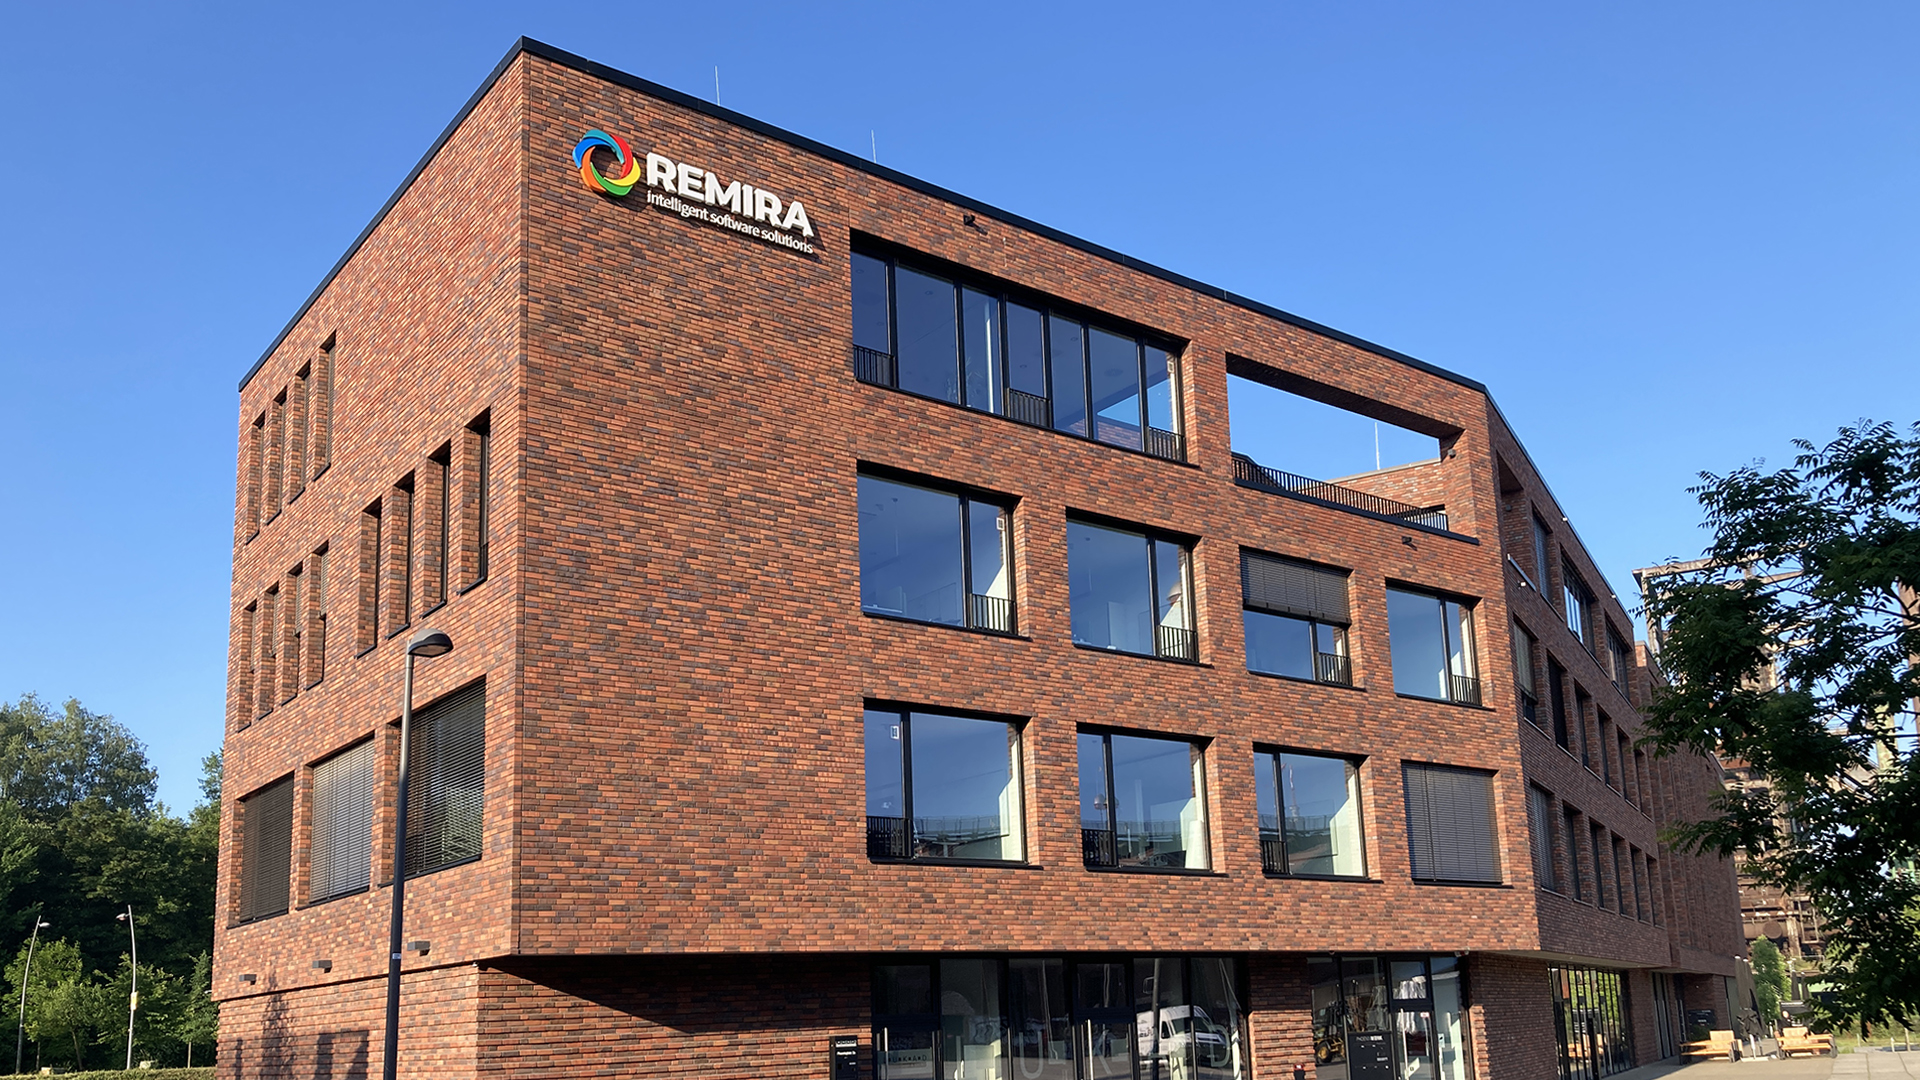 REMIRA building in Dortmund